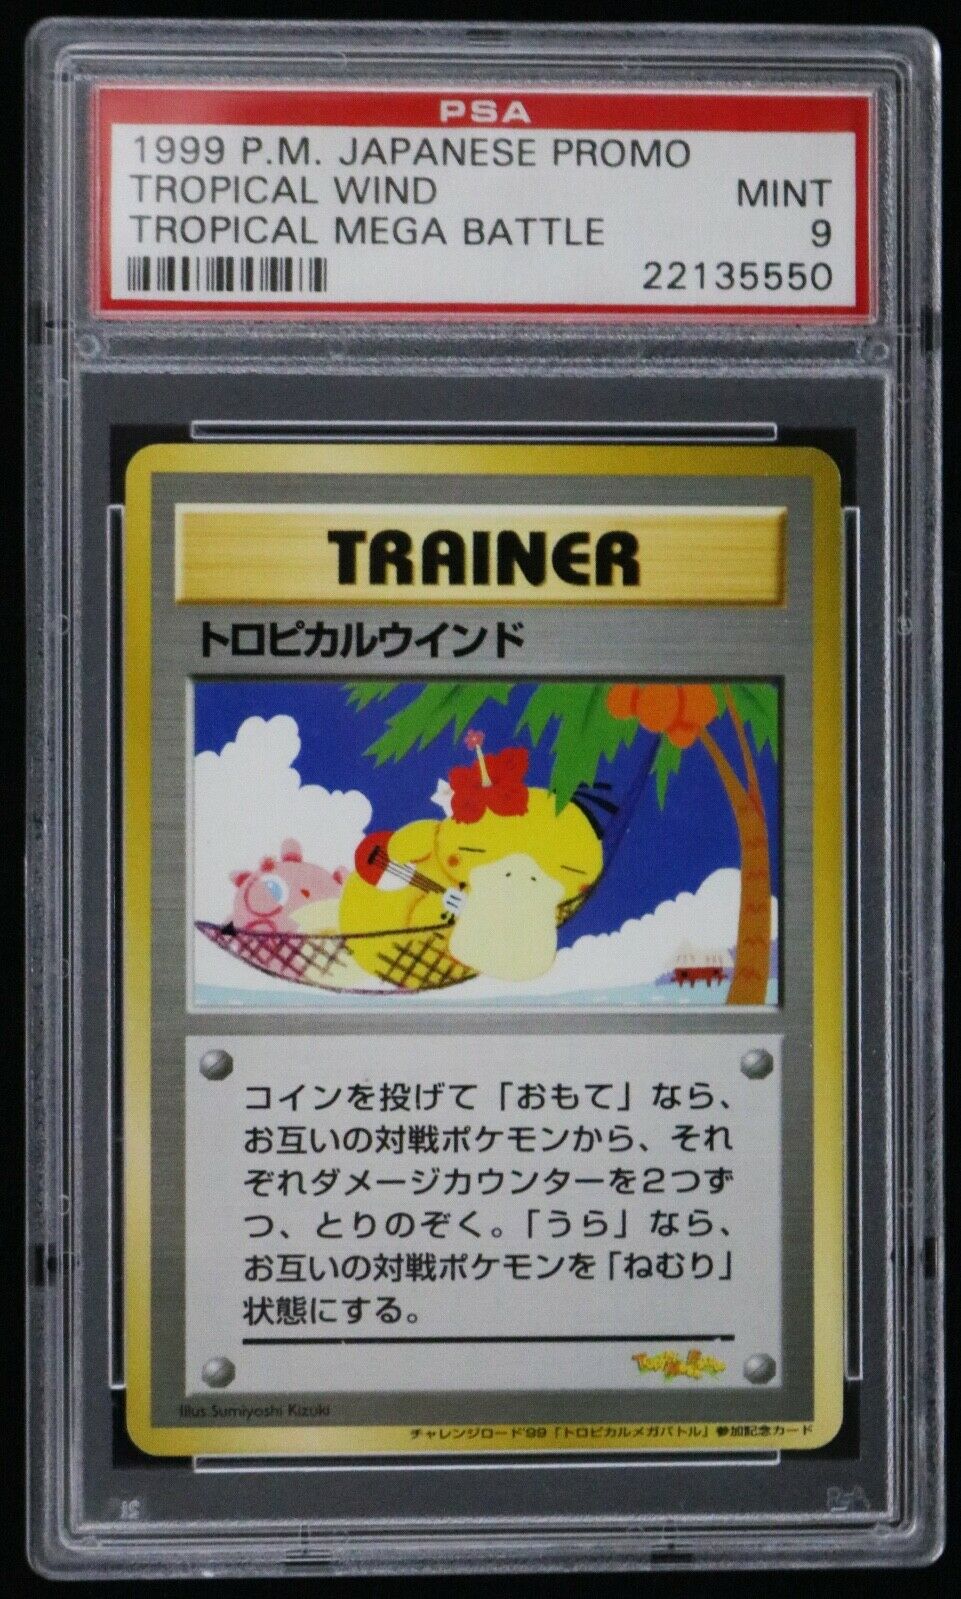 1999 Pokemon Japanese Promo Tropical Mega Battle Tropical Wind Trophy Card PSA 9